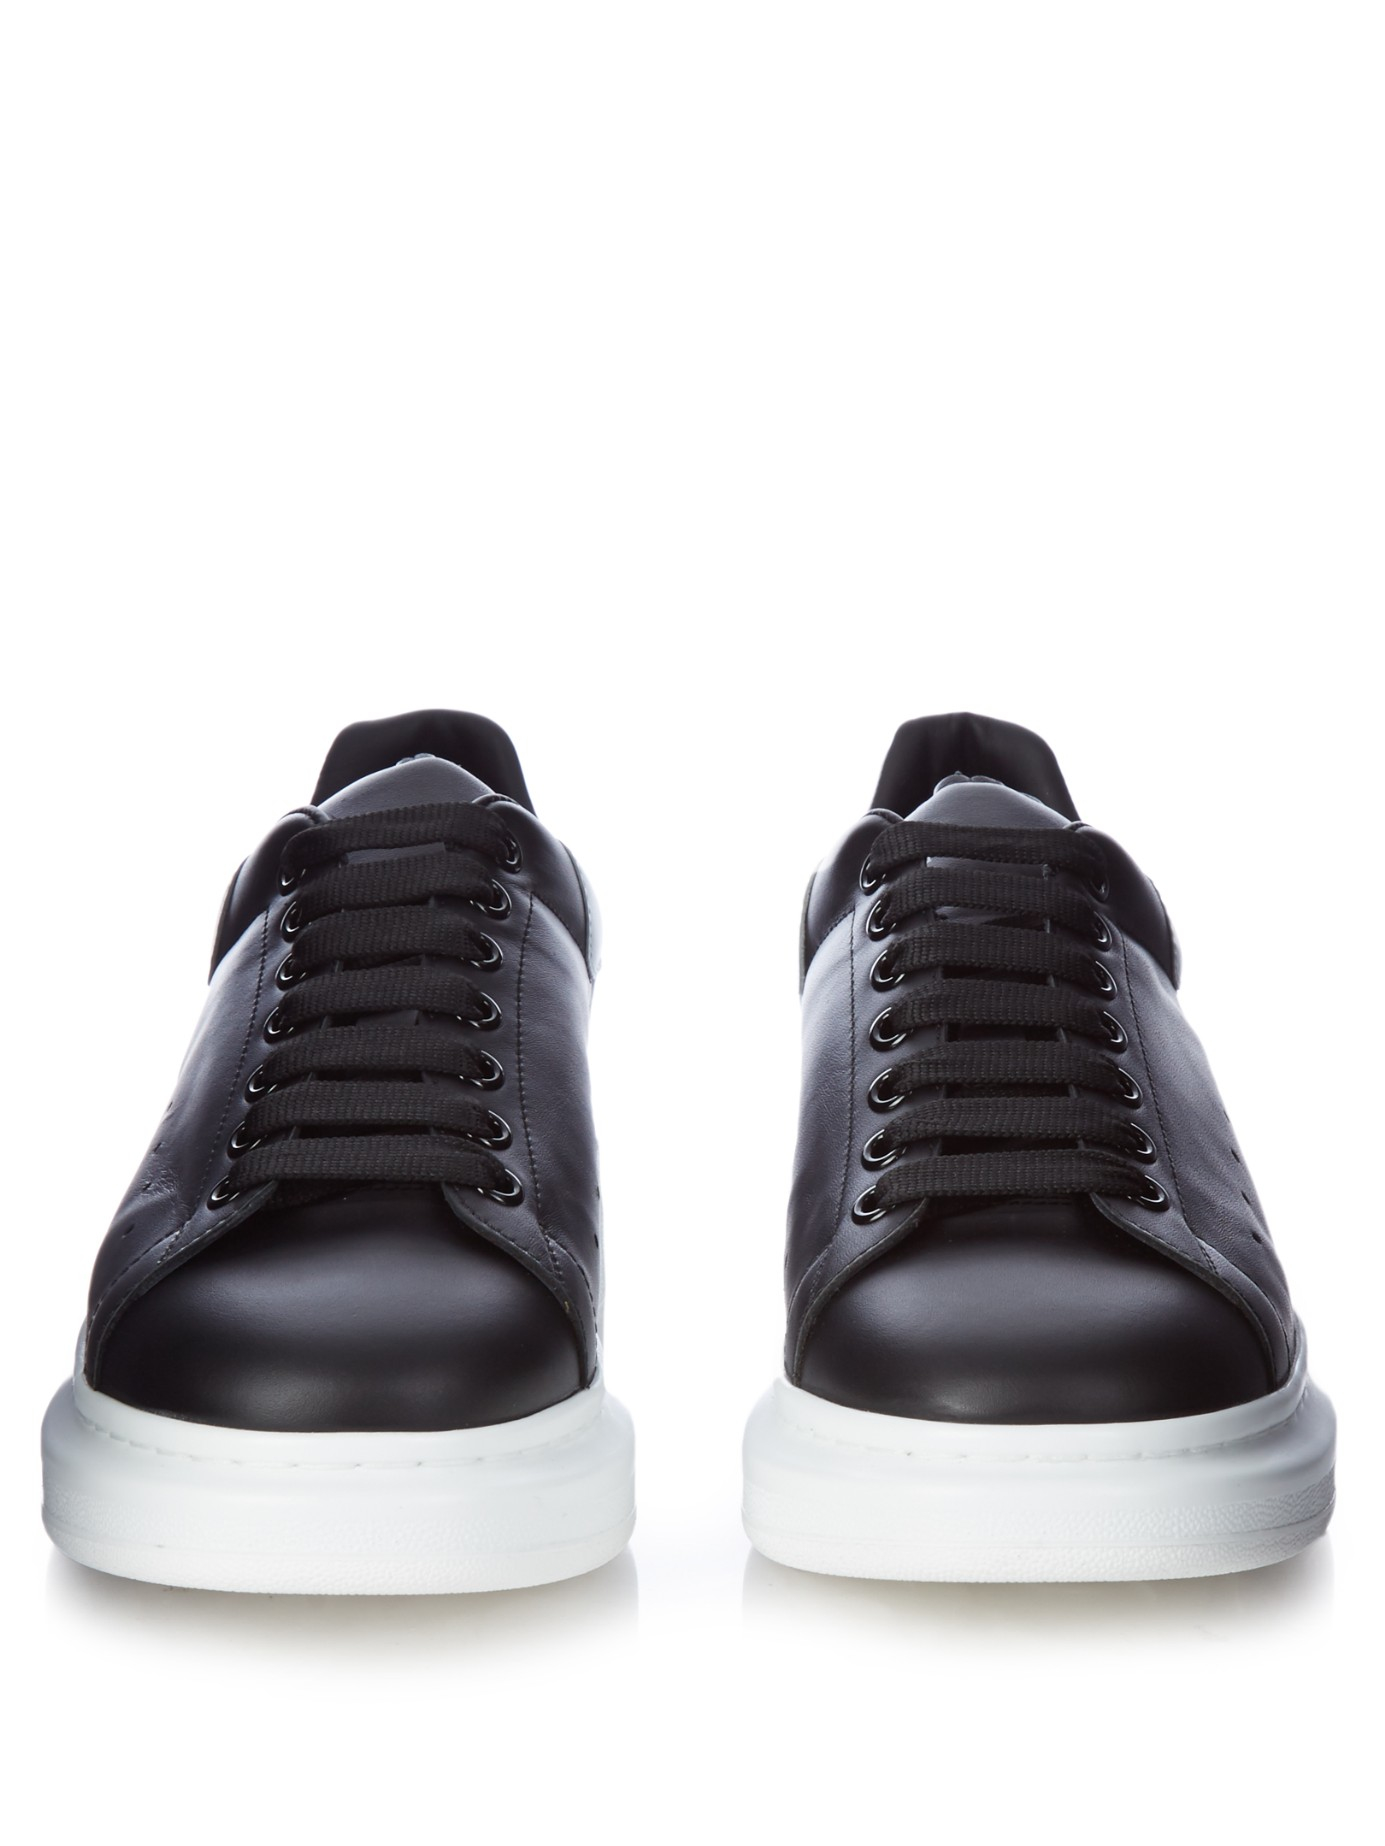 black white sole trainers